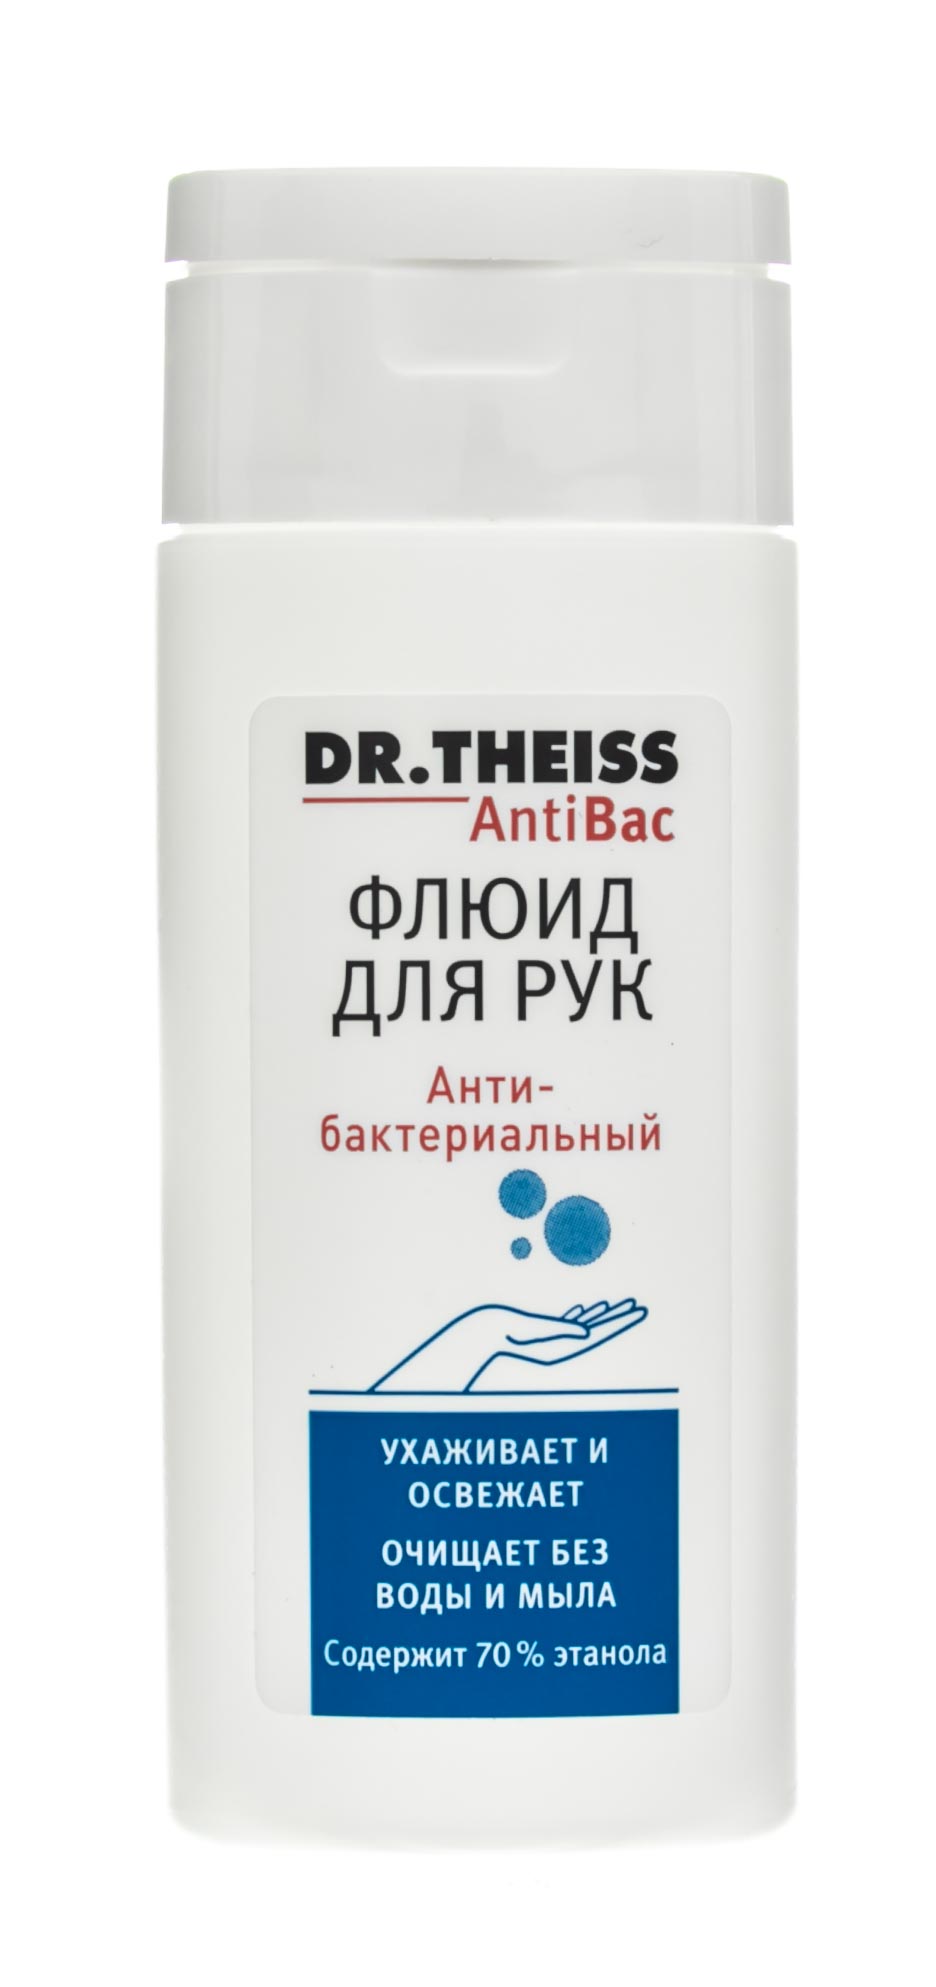 Dr. Theiss Анти Бак флюид для рук 50 мл (Dr. Theiss, )